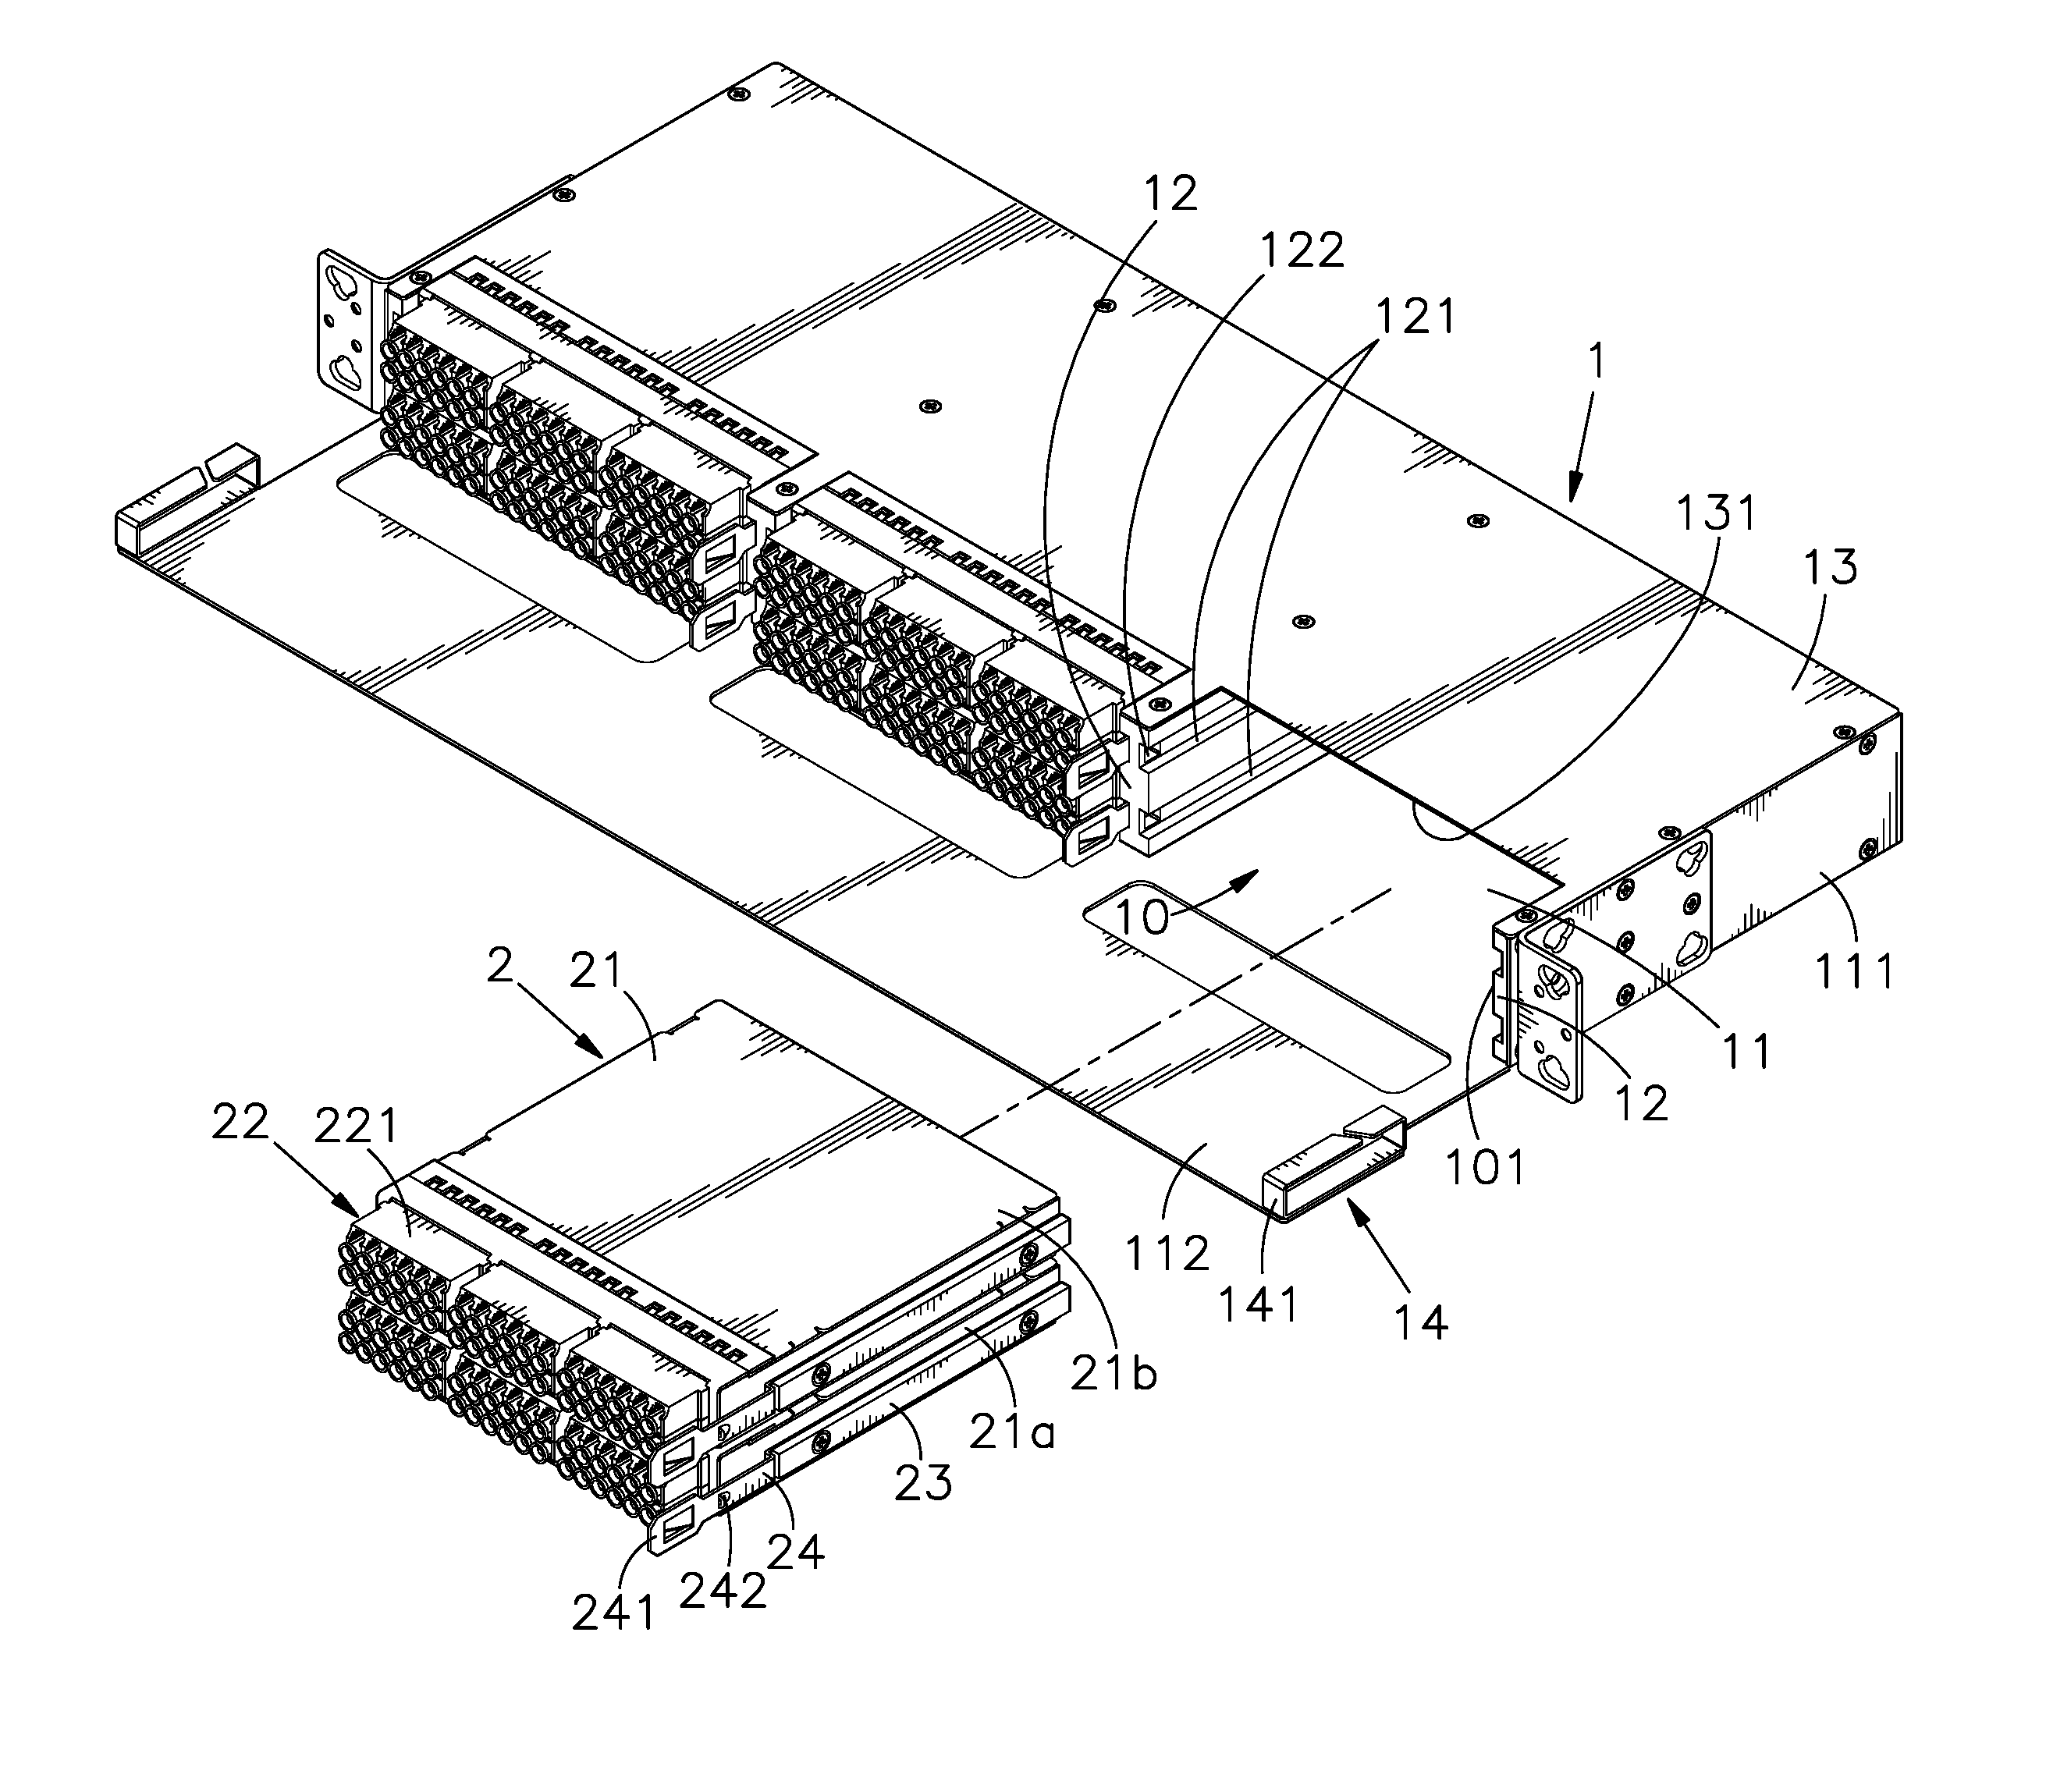 Fiber module rack system